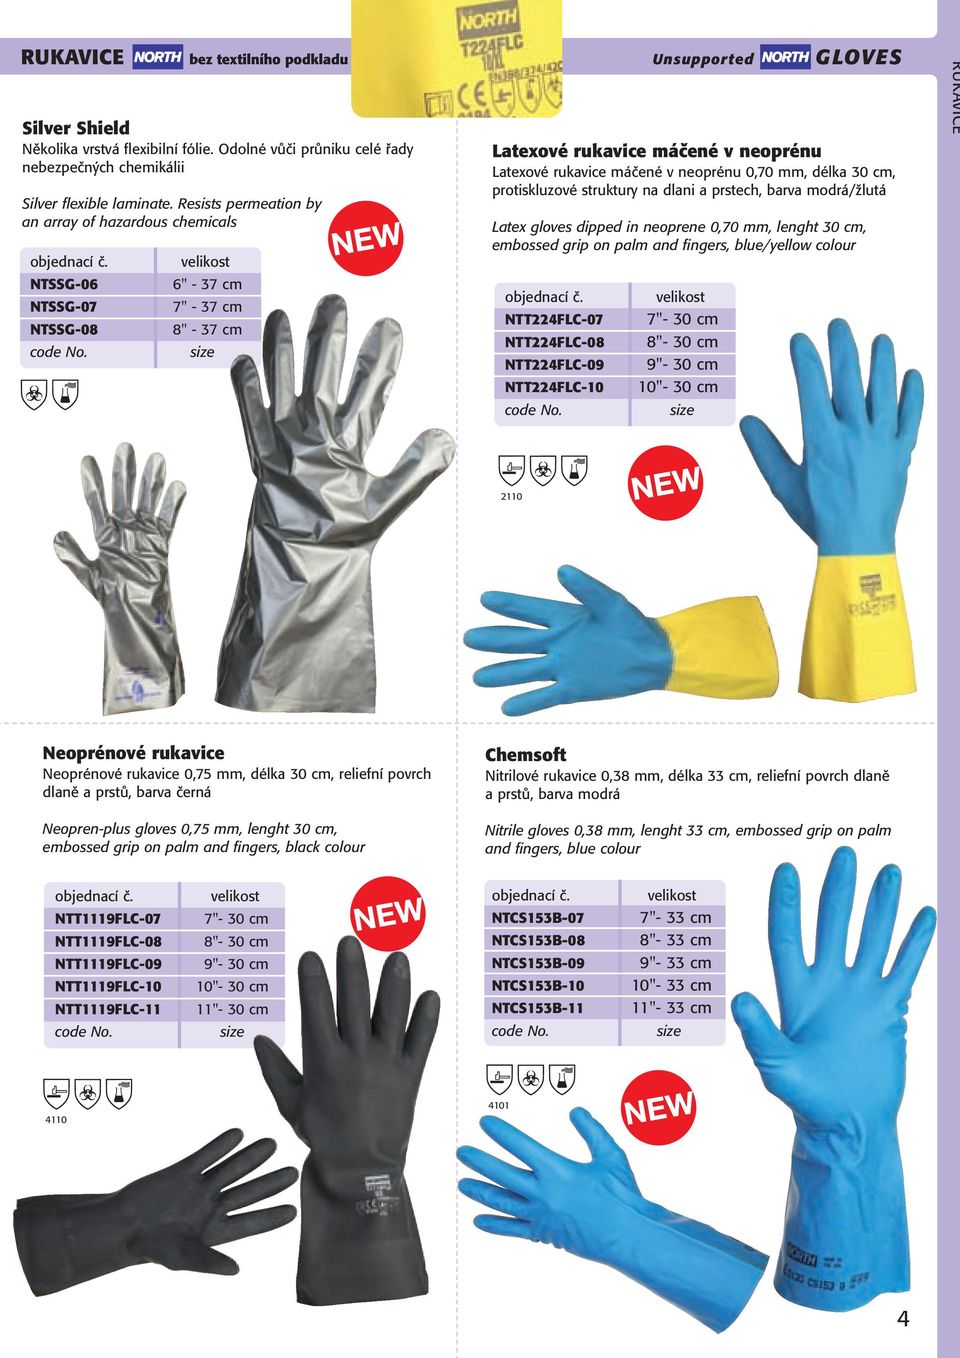 cm, protiskluzové struktury na dlani a prstech, barva modrá/žlutá Latex gloves dipped in neoprene 0,70 mm, lenght 30 cm, embossed grip on palm and fingers, blue/yellow colour NTT224FLC 07 NTT224FLC